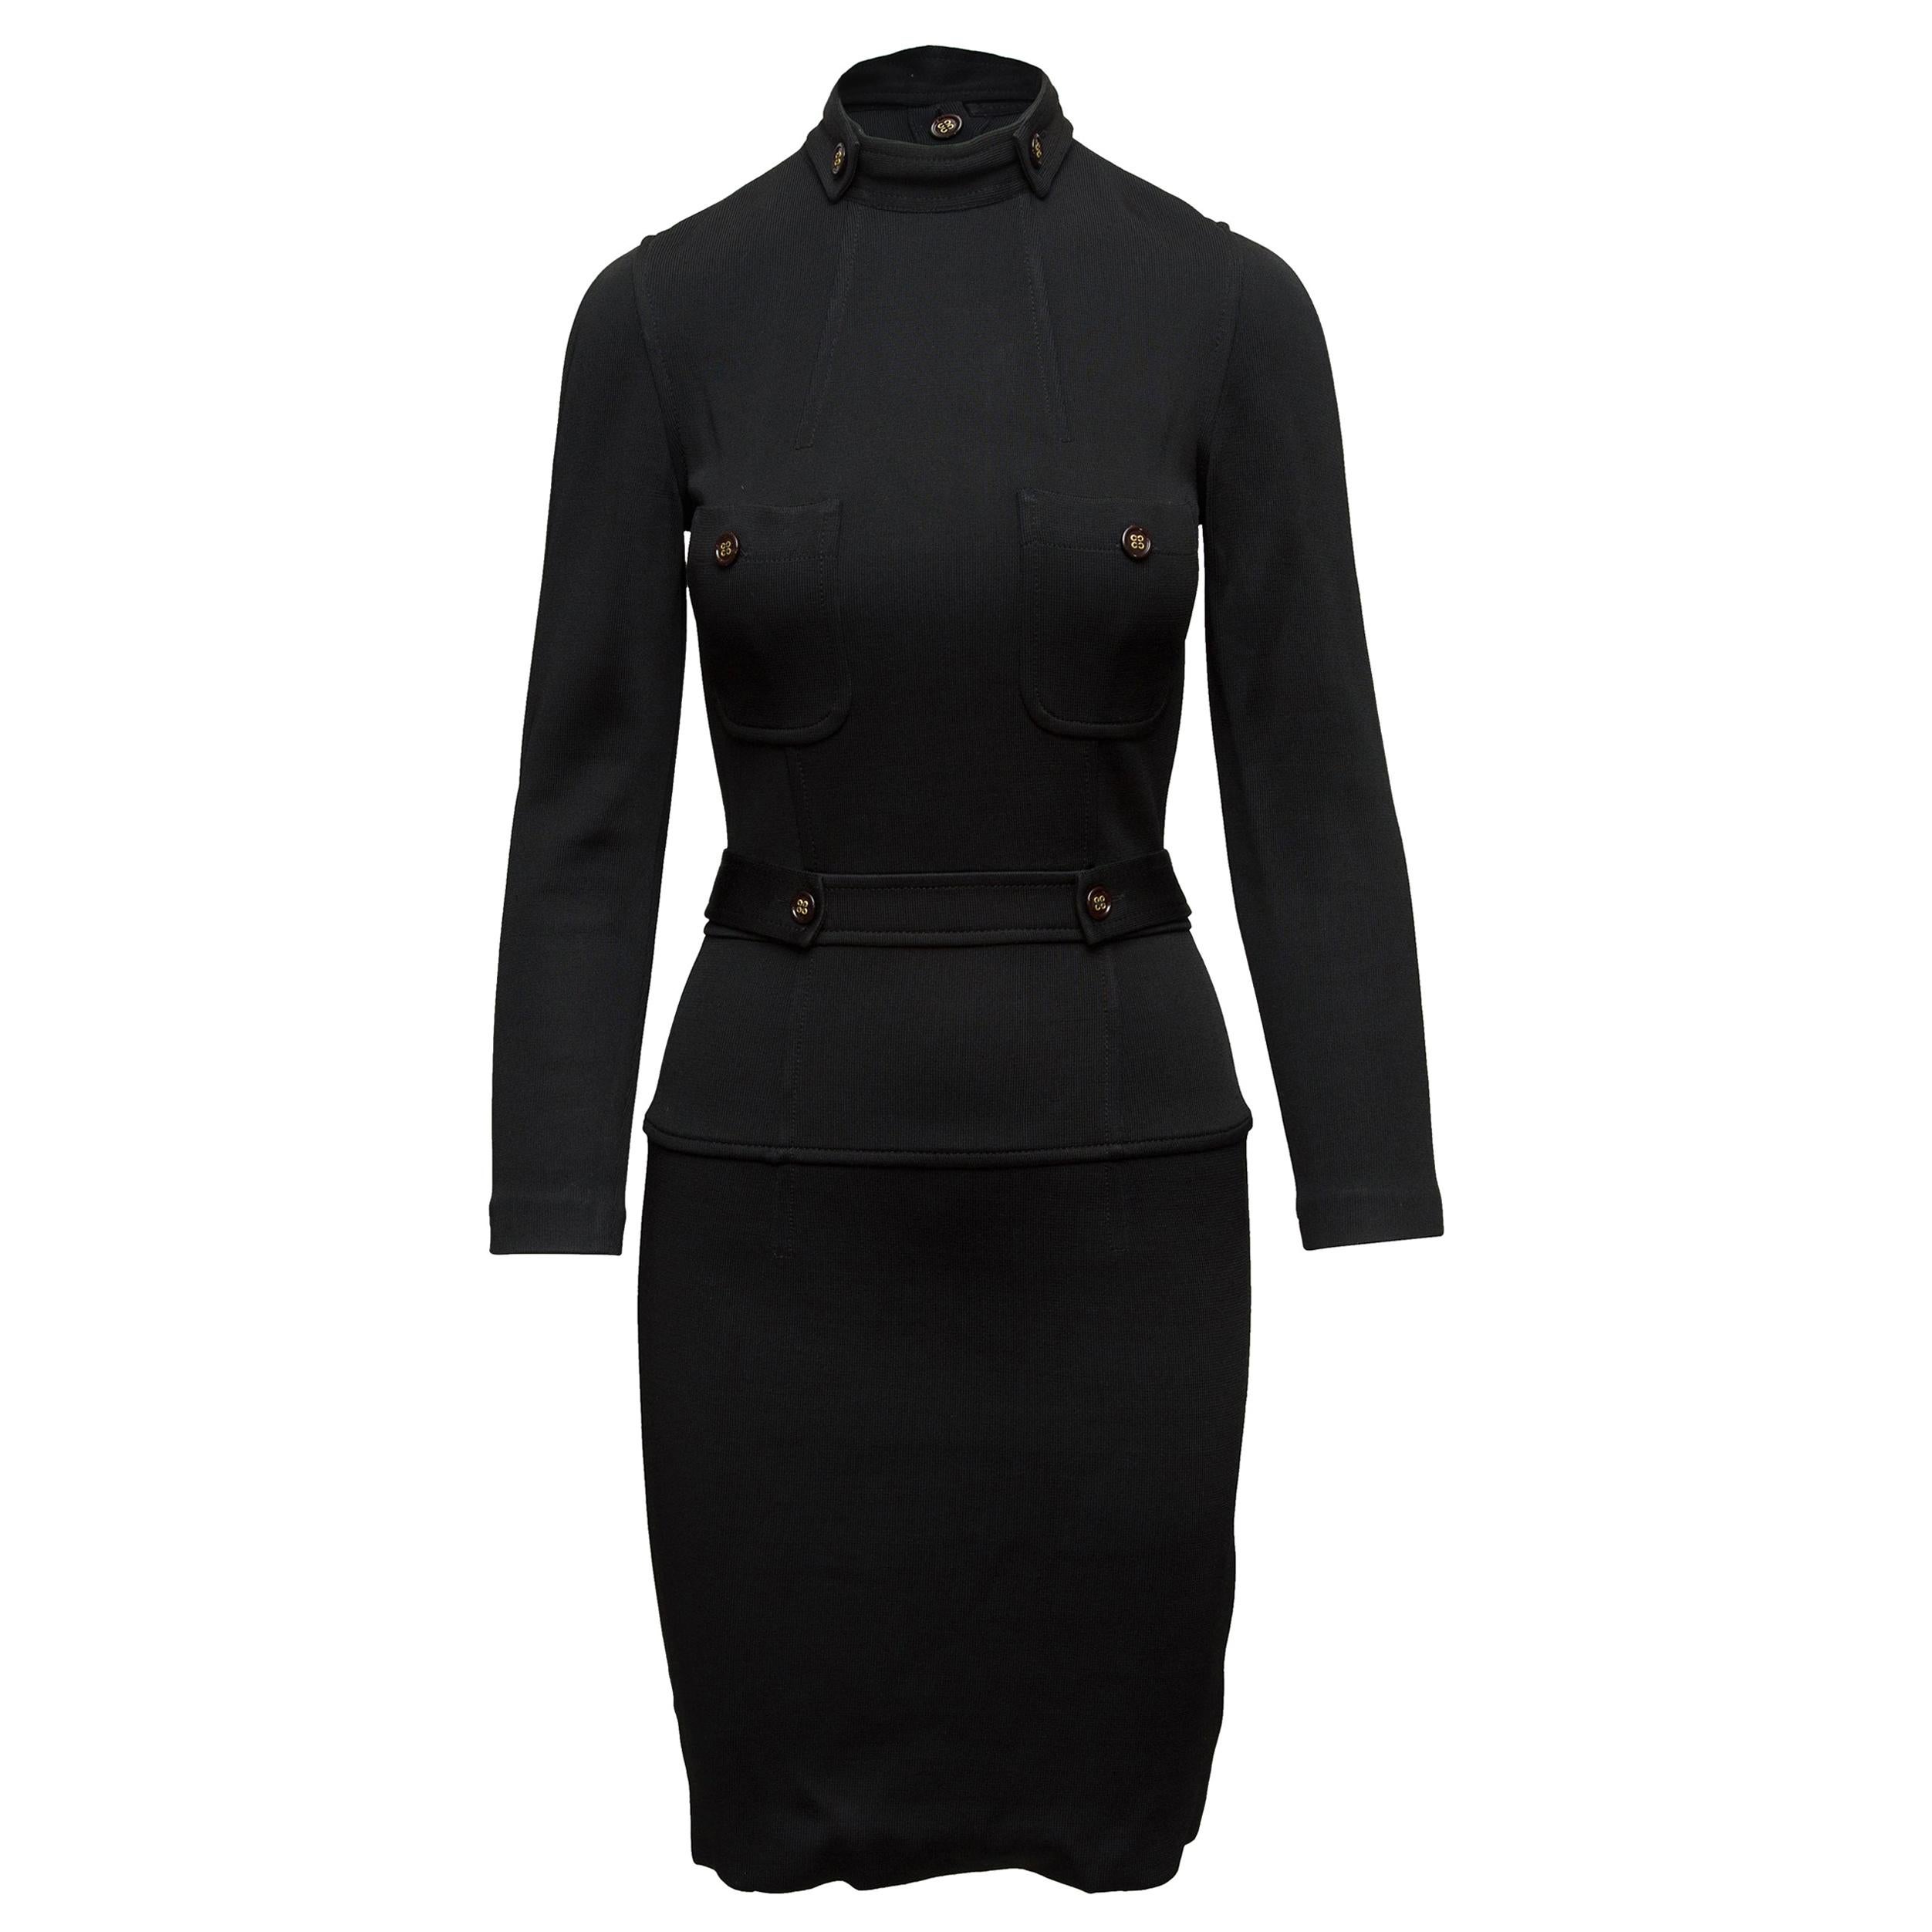 Yves Saint Laurent Black Bodycon Dress